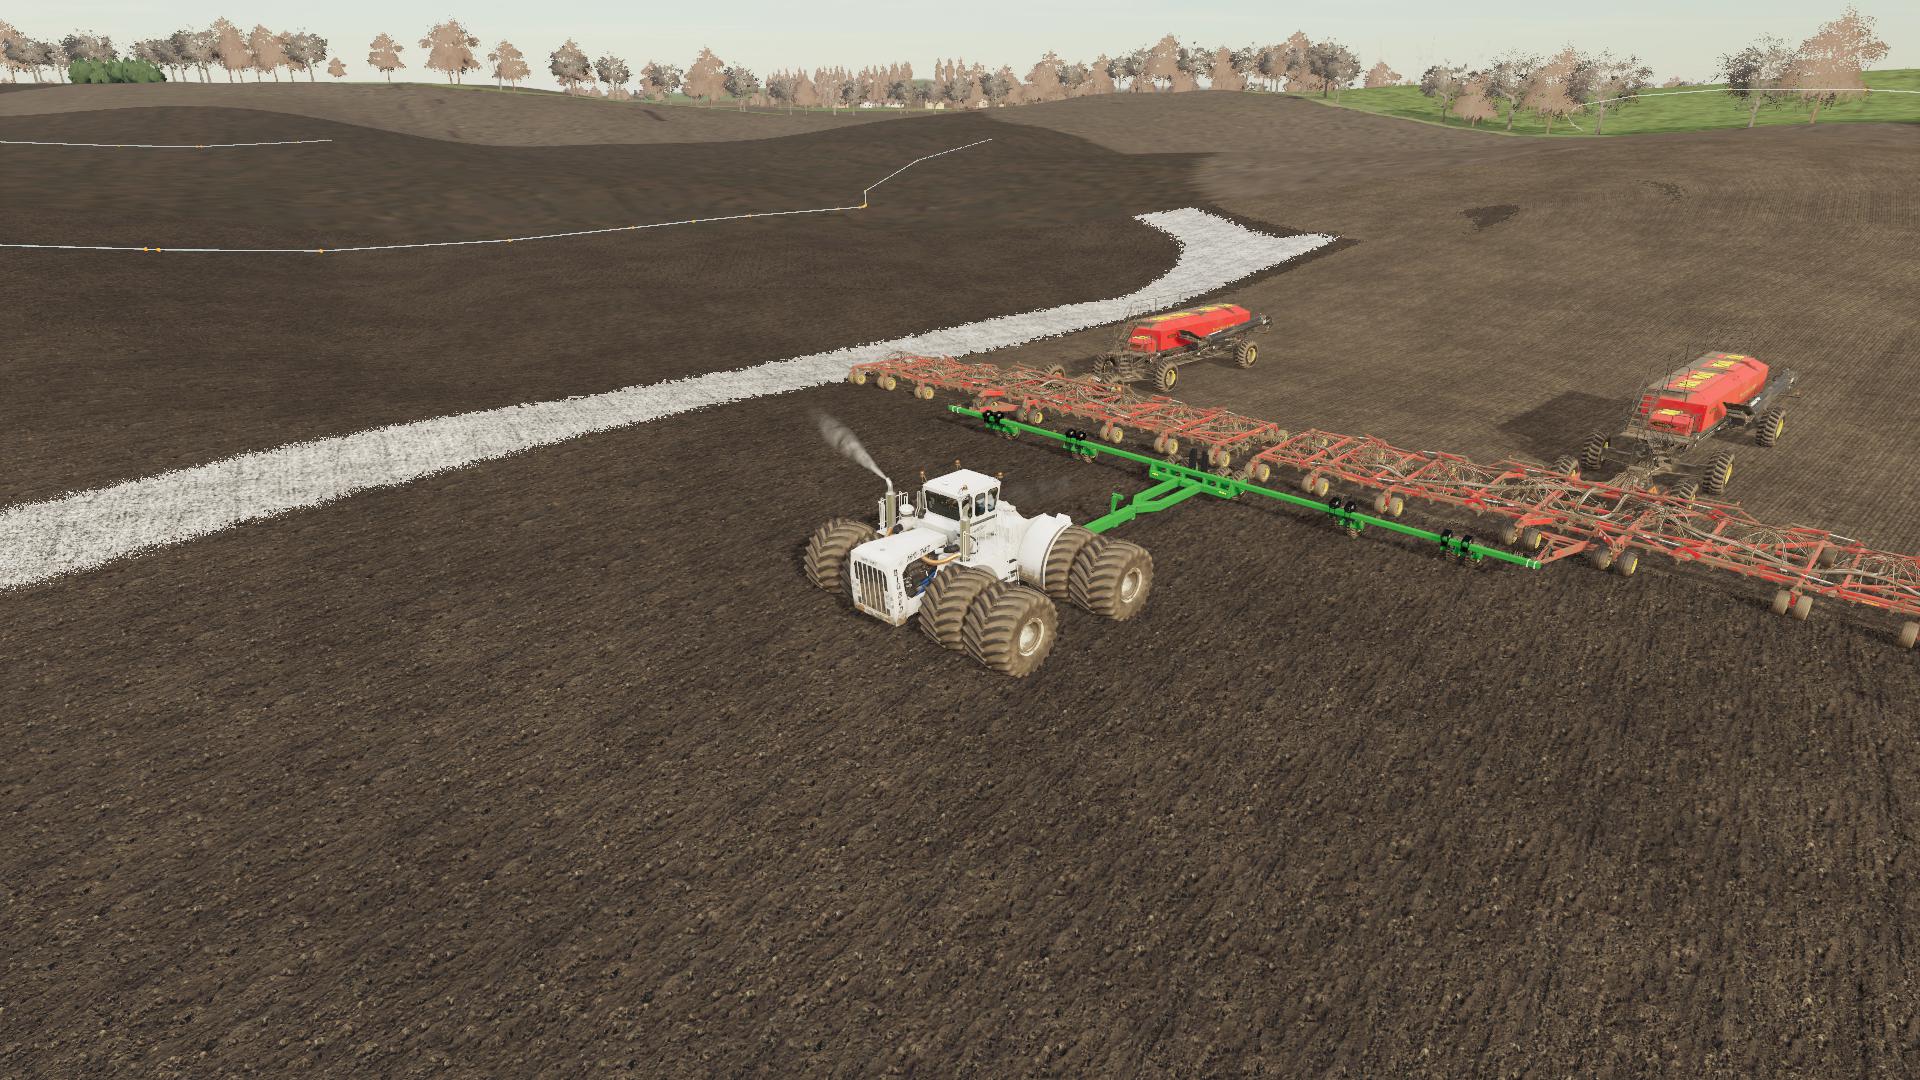 big bud farming simulator 19